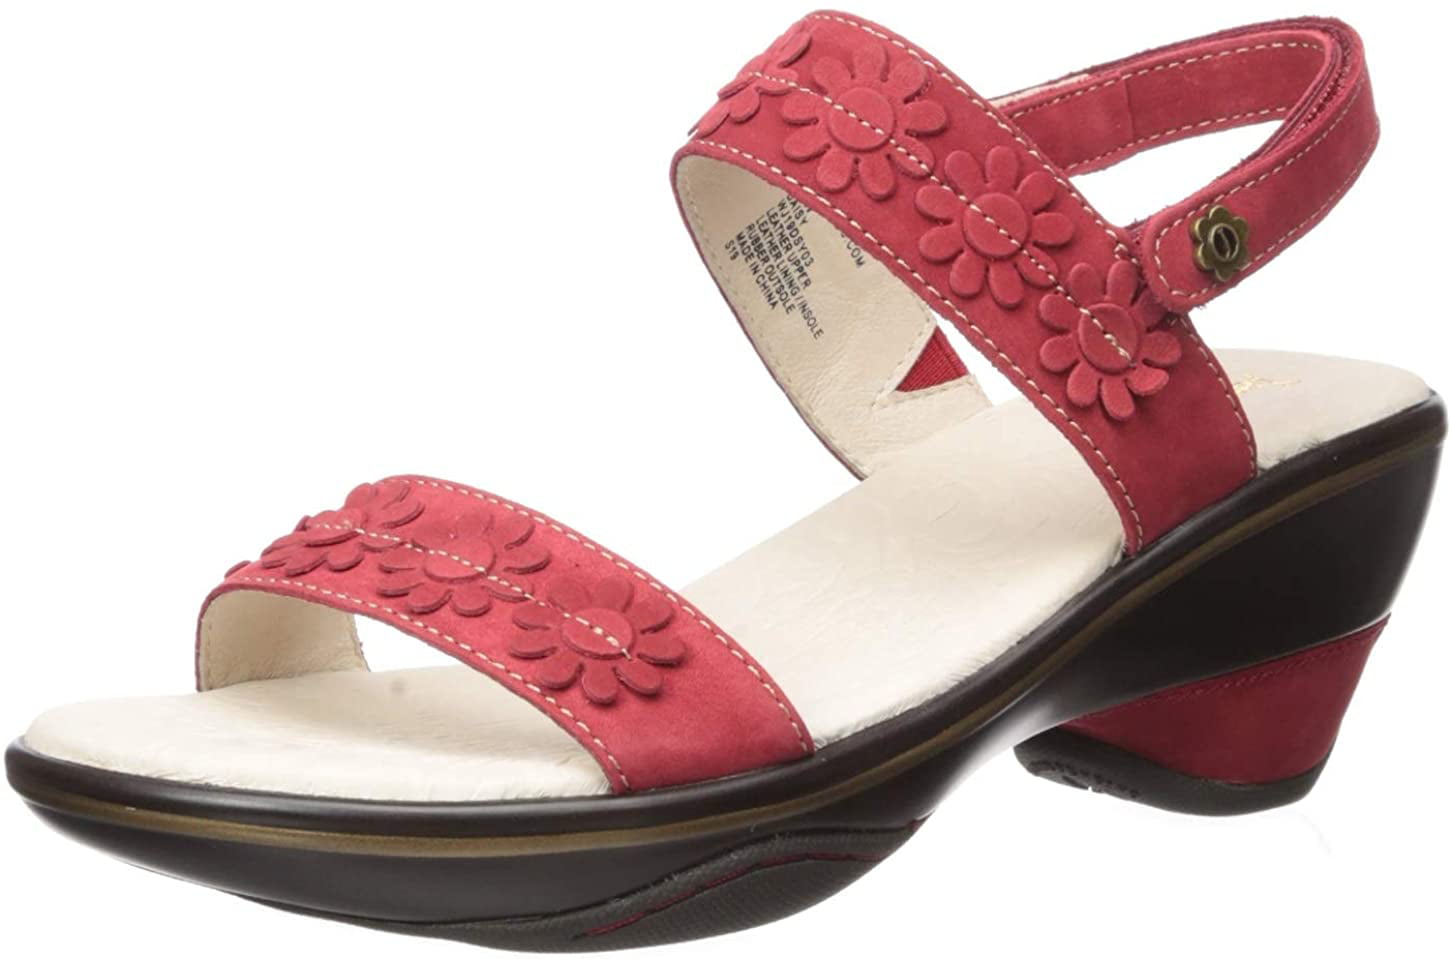 Jambu Women's Daisy Wedge Sandal, Red, 11 M US | Walmart Canada